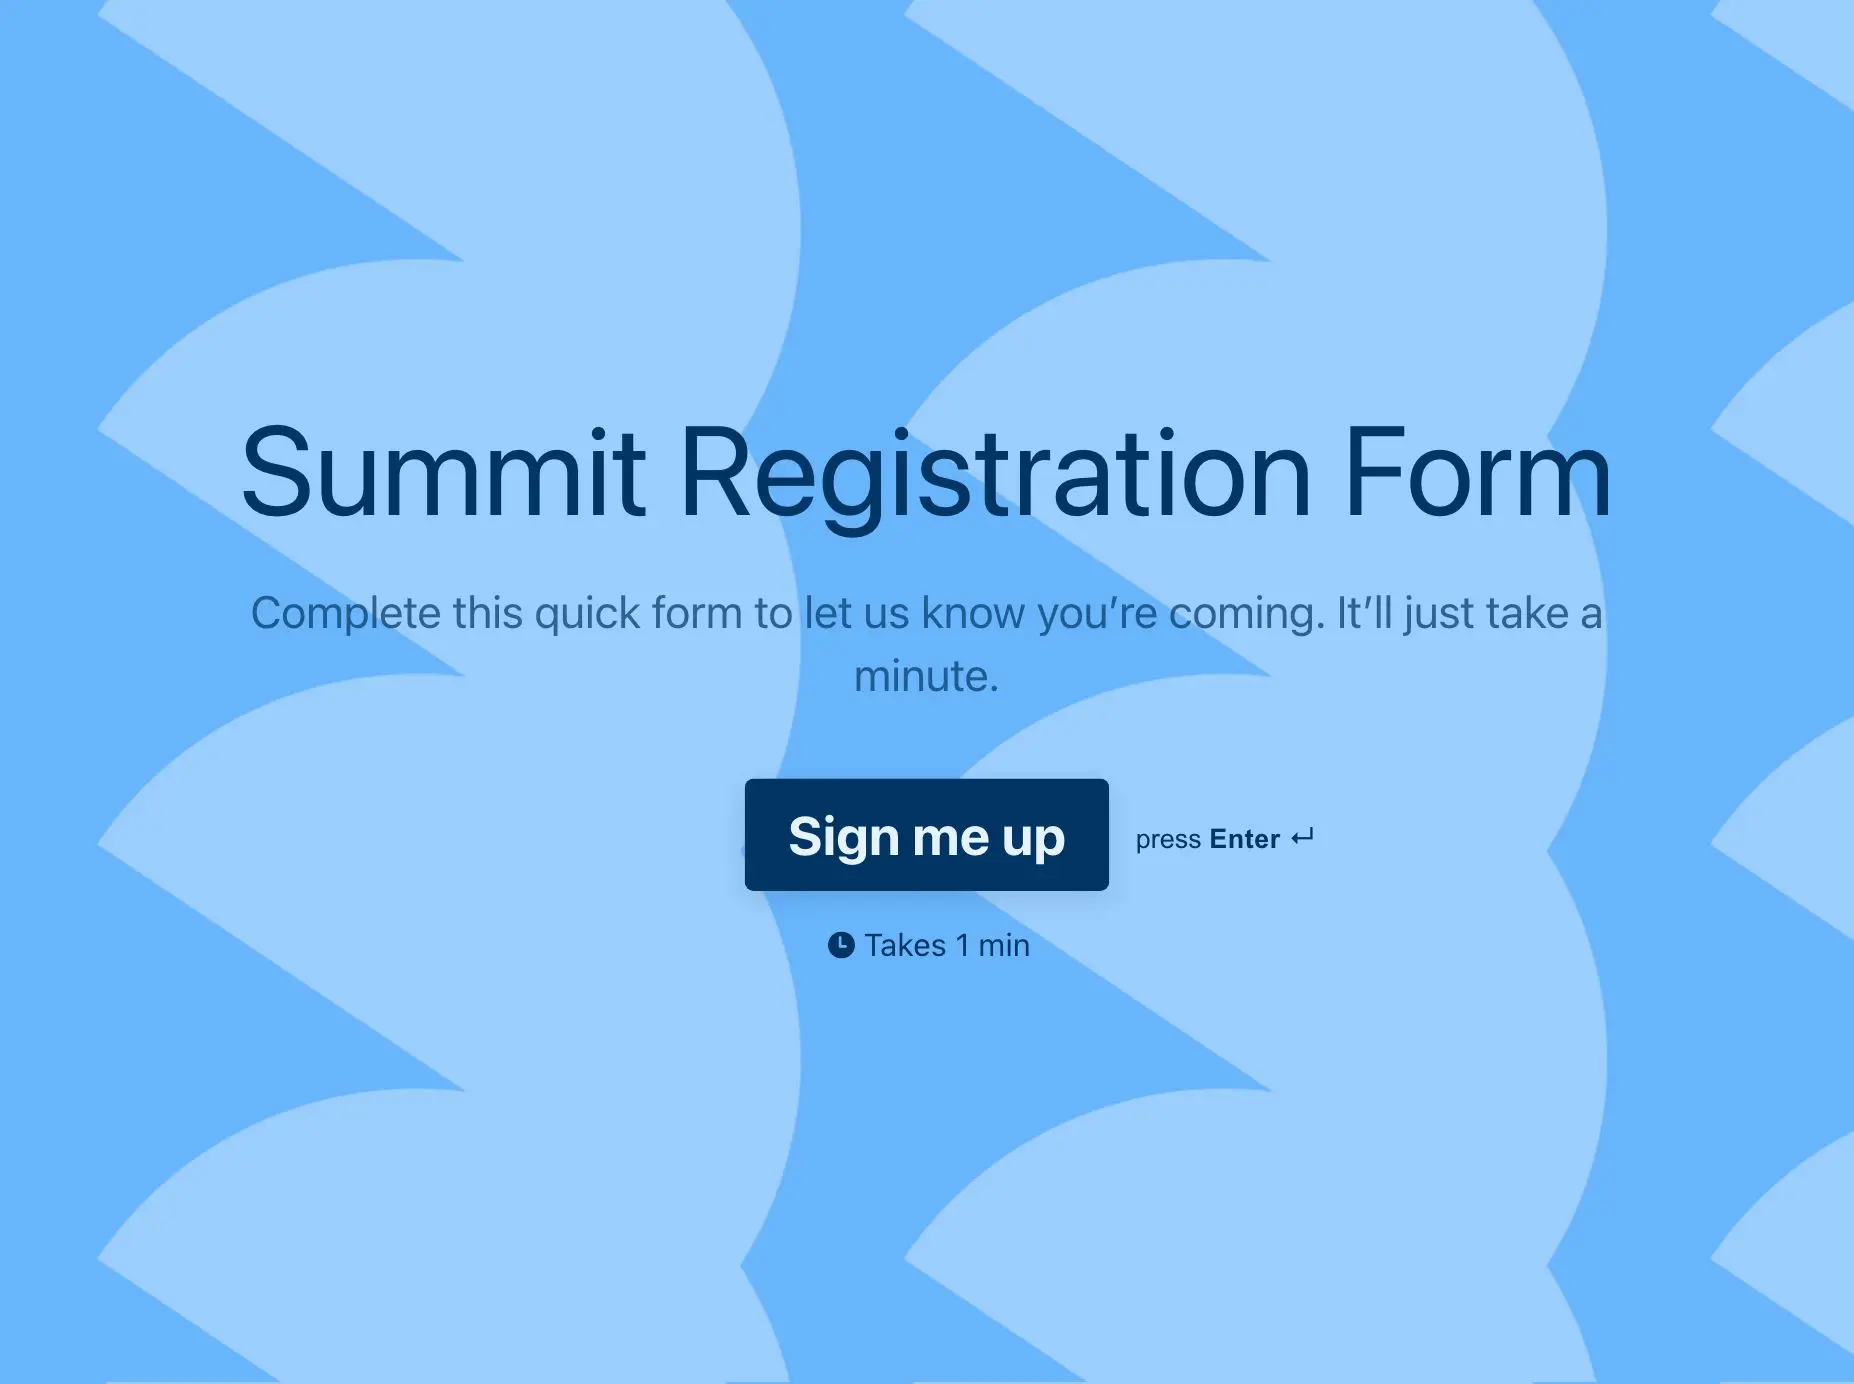 Summit Registration Form Template Hero